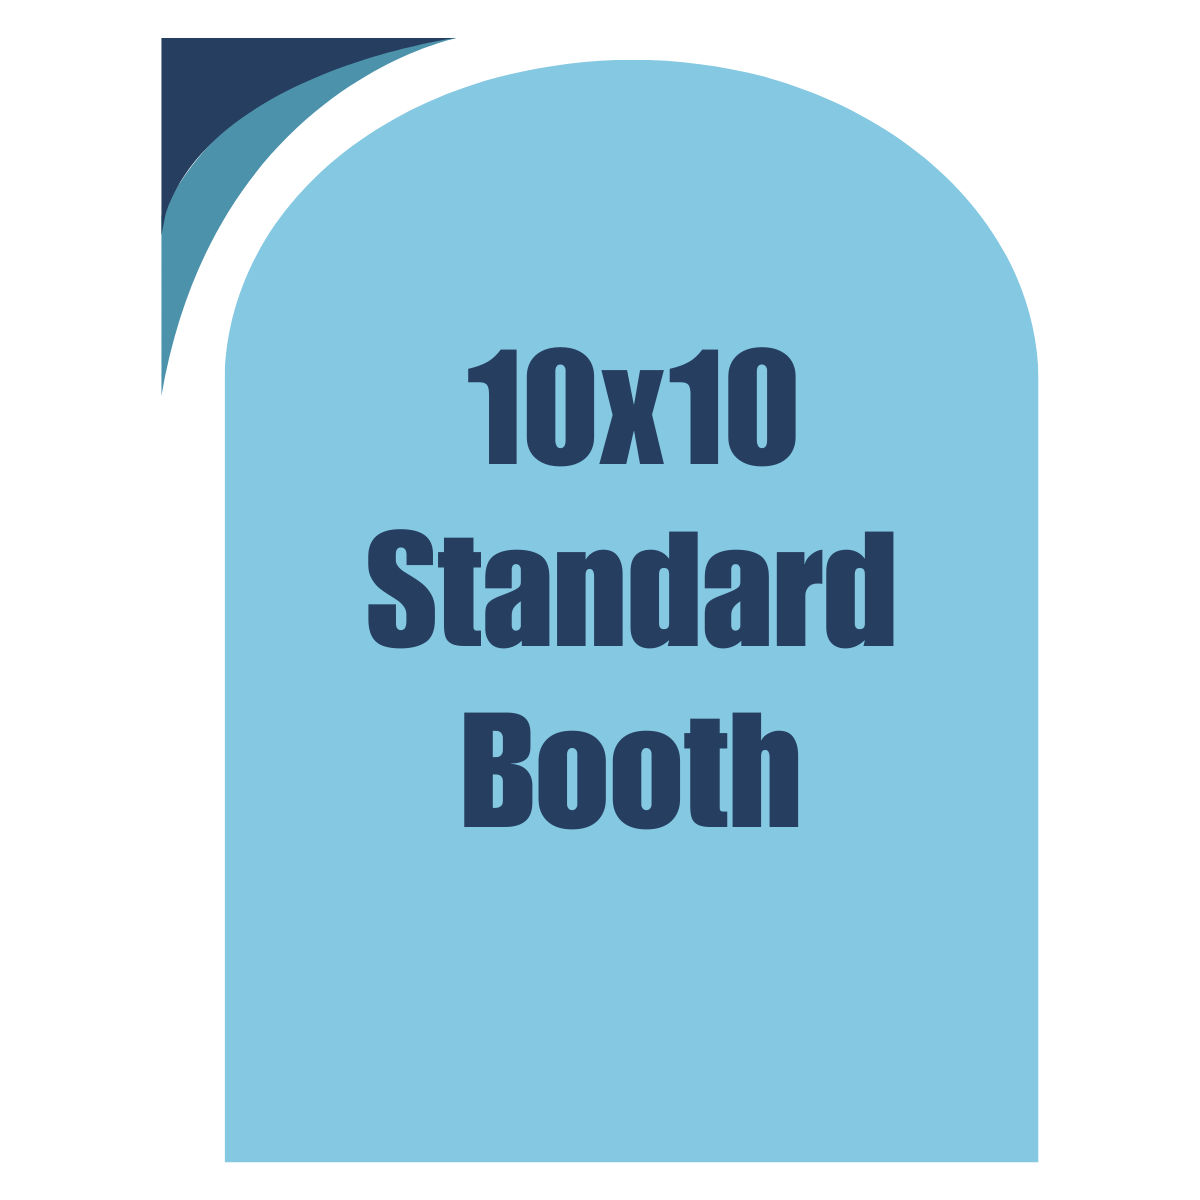 10x10 Standard Booth